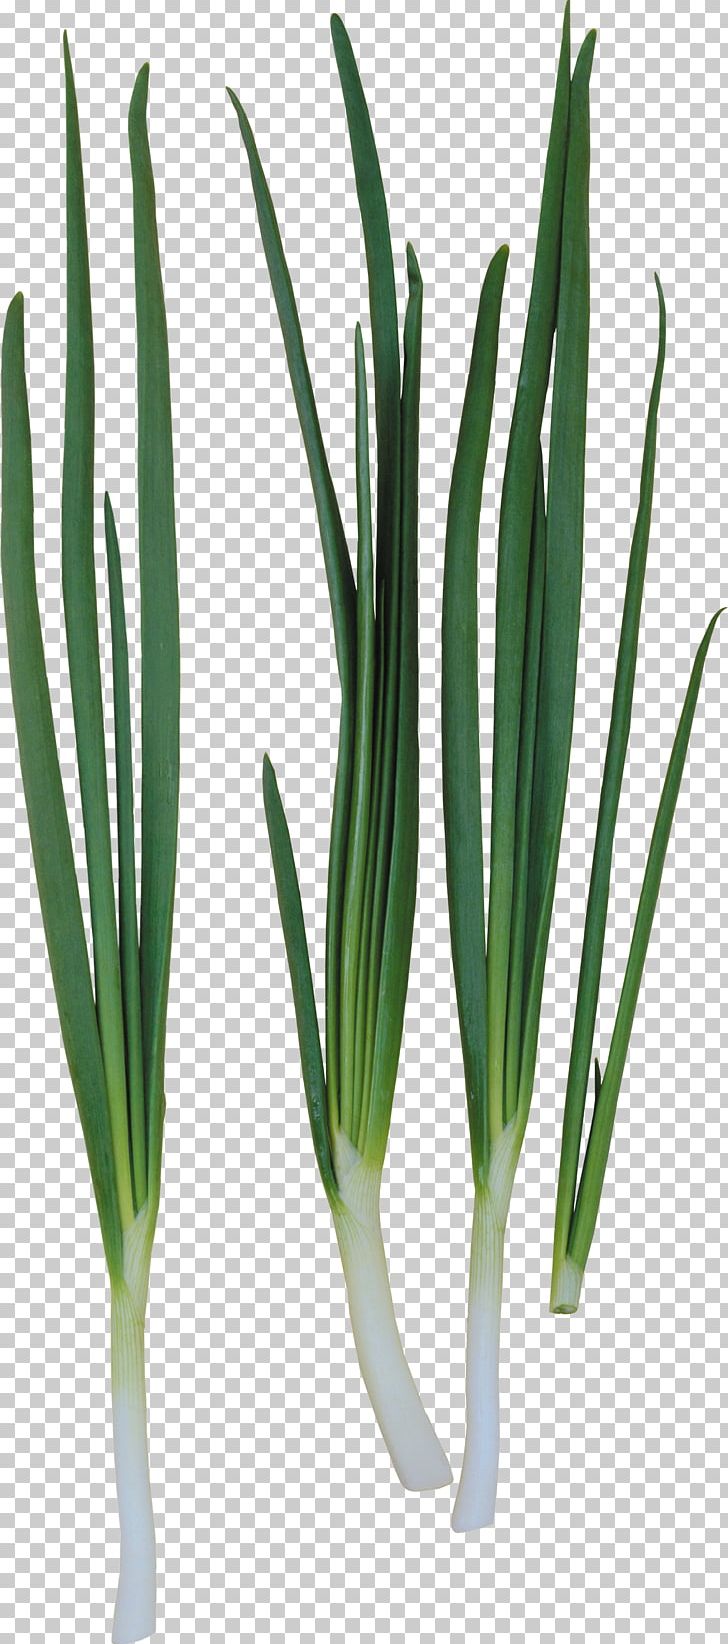 Allium Fistulosum Onion Ring Garlic PNG, Clipart, Allium, Allium Fistulosum, Commodity, Garlic, Grass Free PNG Download